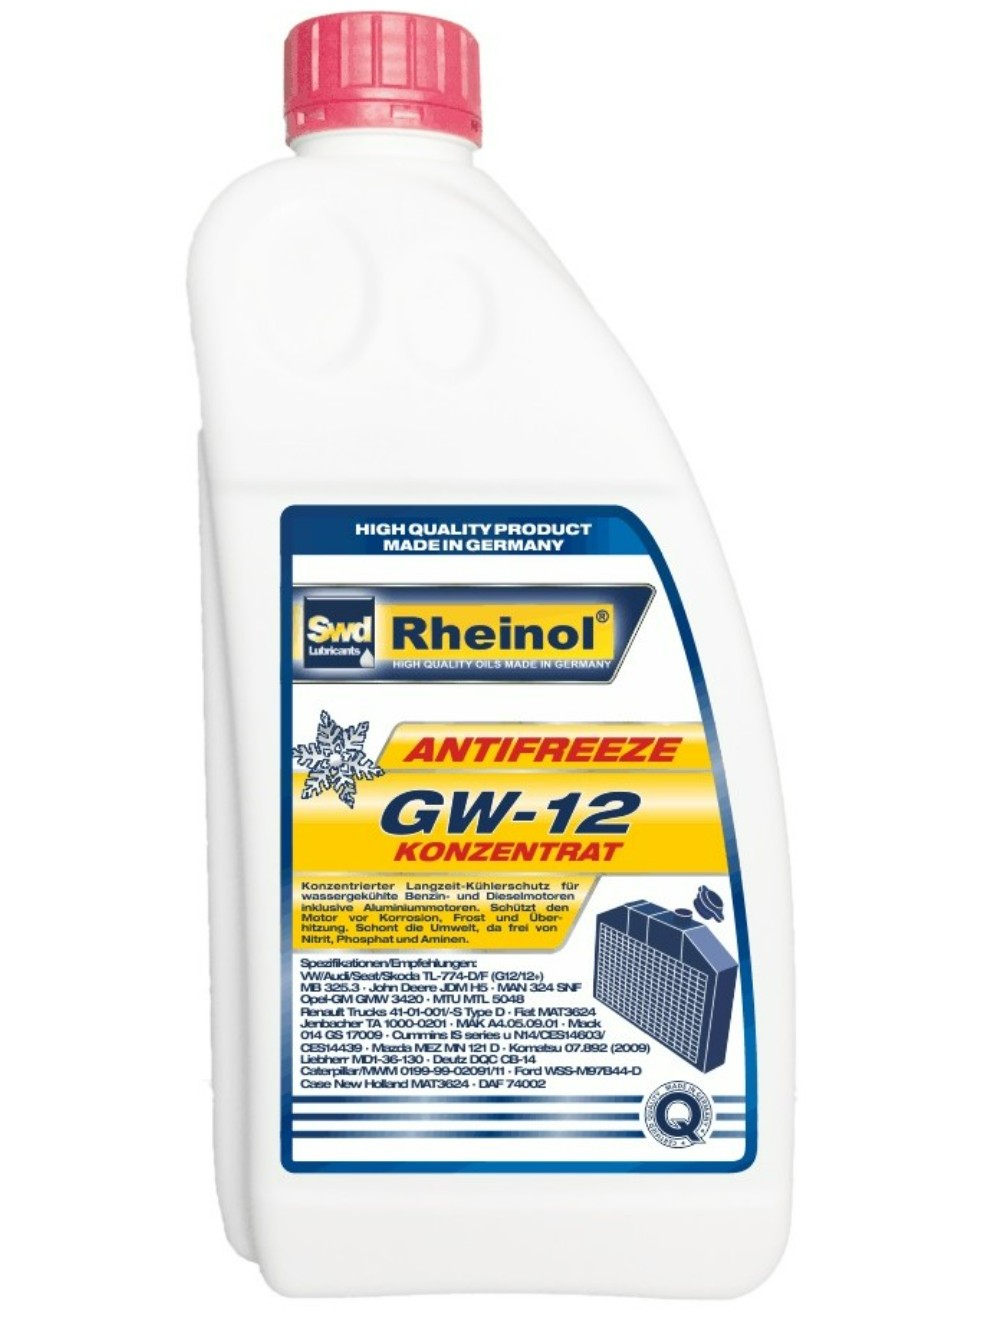 Охлаждающая жидкость SWD Rheinol Antifreeze GW-12 Konzentrat 1,5 л